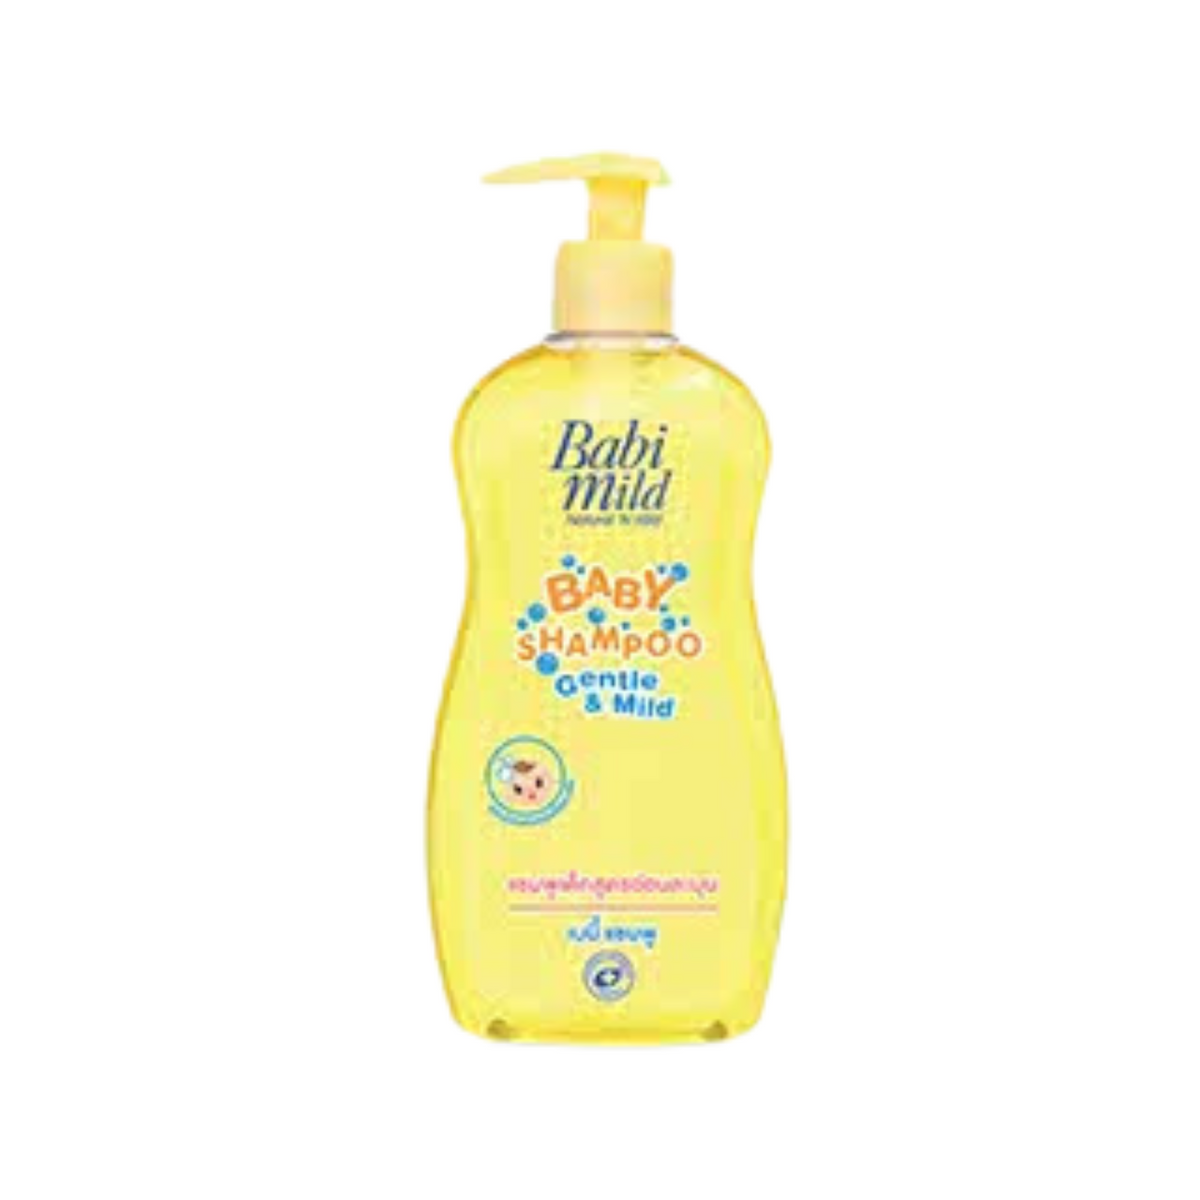 baby-mild-shampoo-gentle-mild-400ml